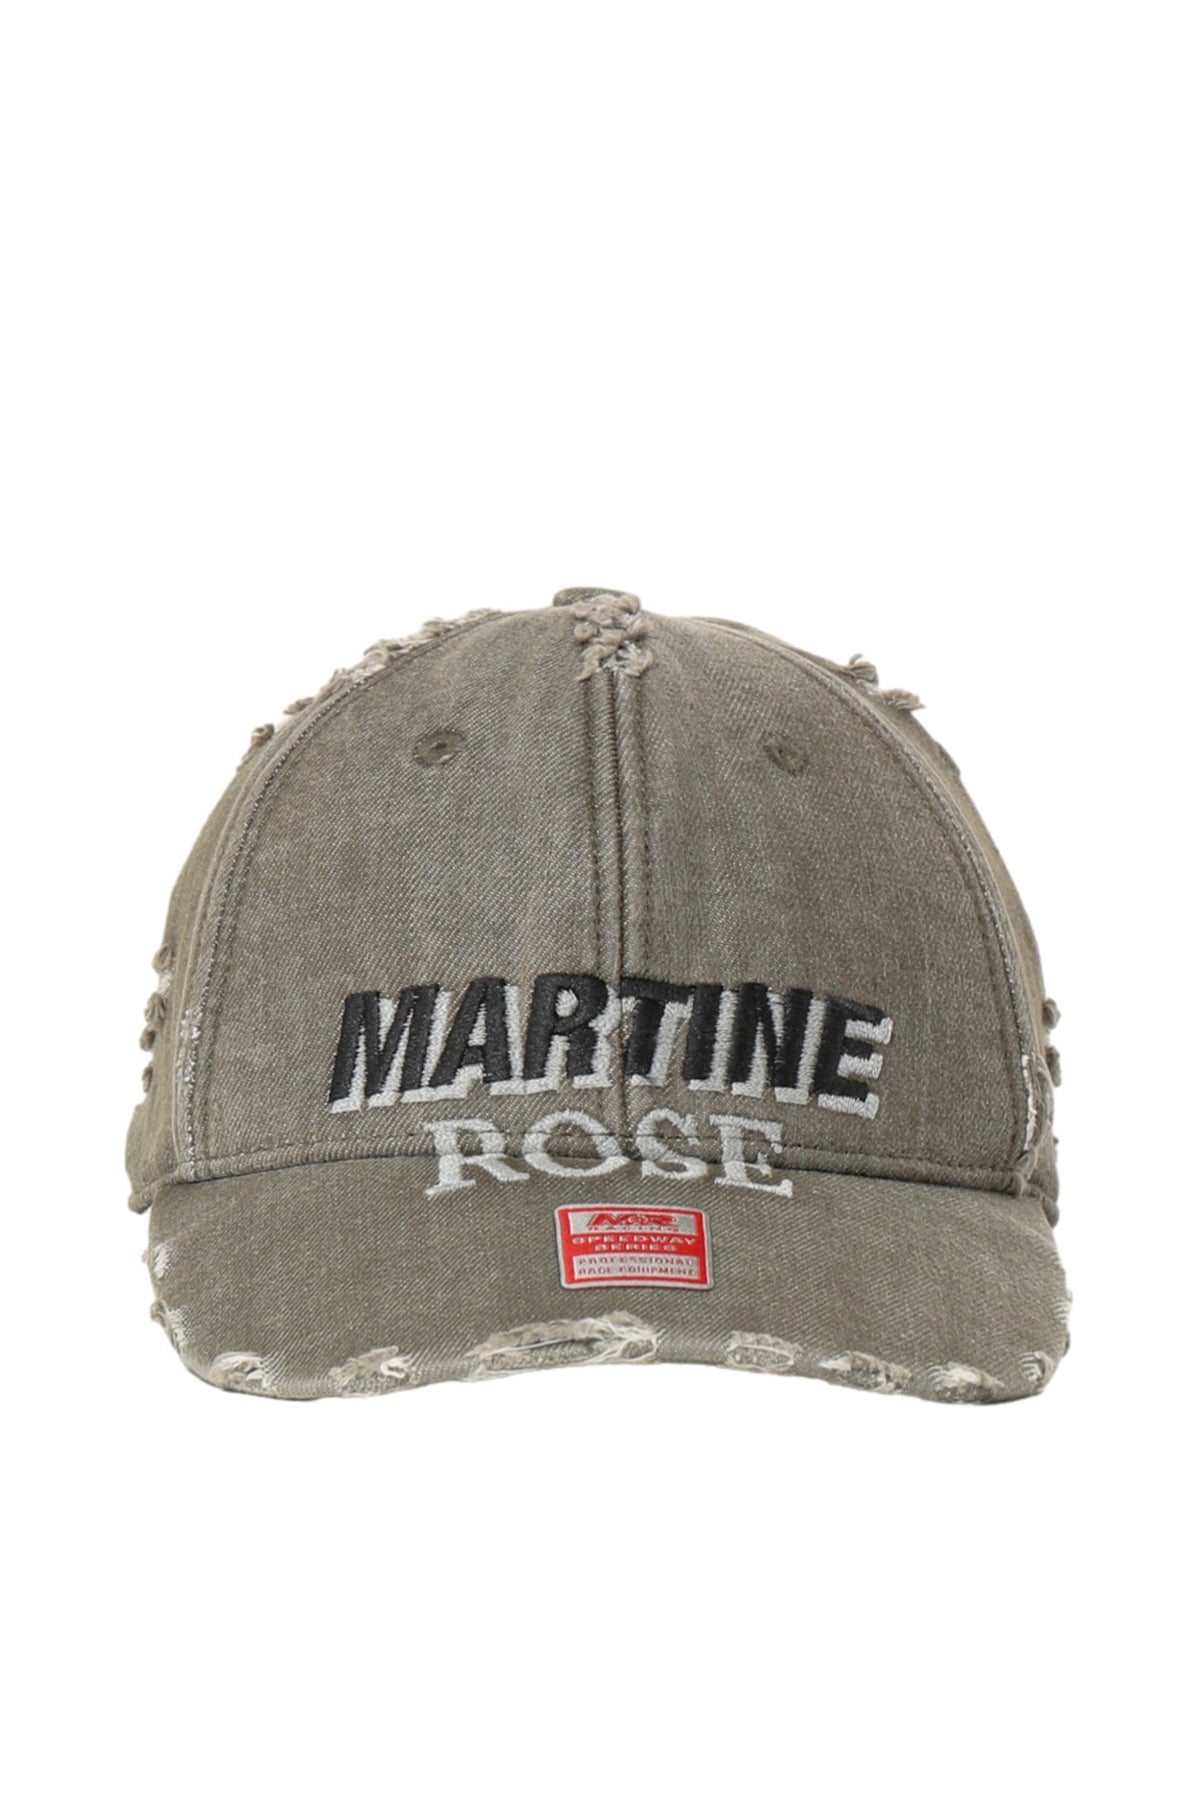 Martine Rose ROLLED BACK CAP / GRN MARTINE